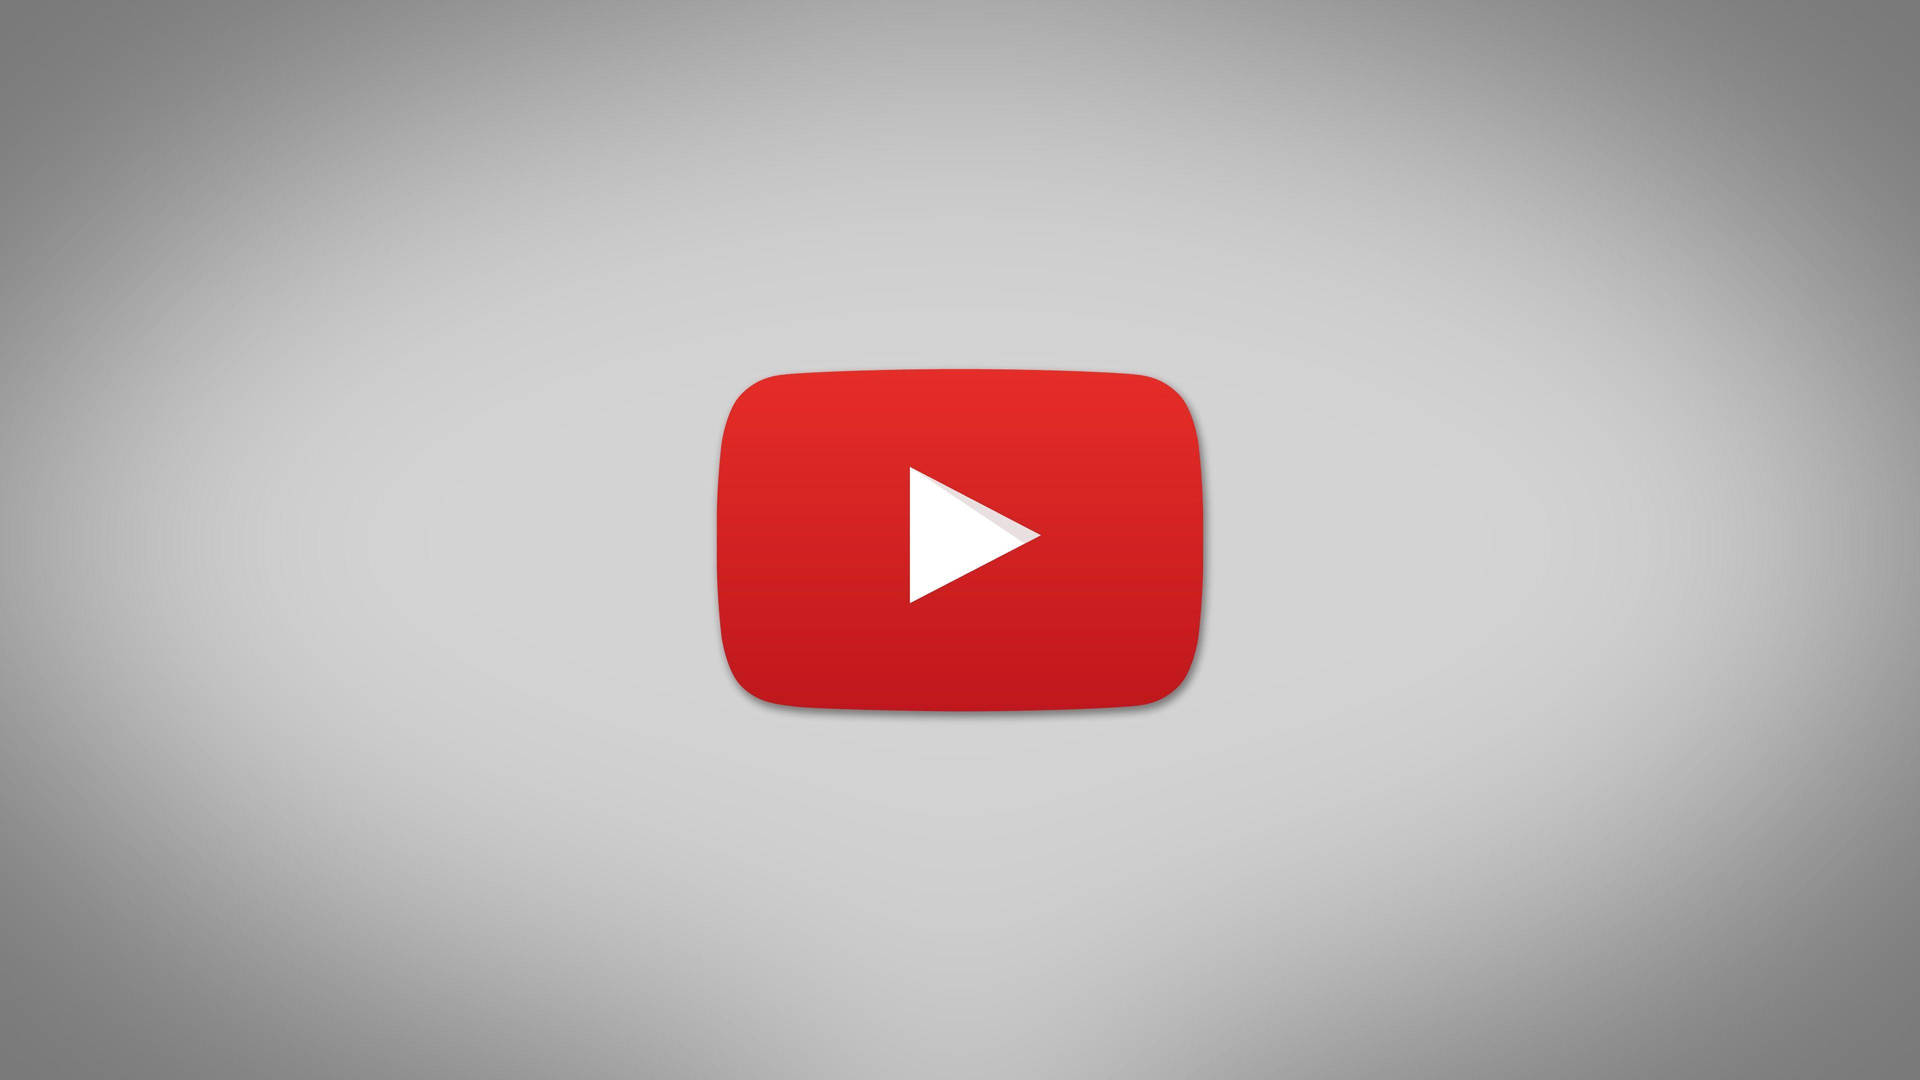 Aesthetic Youtube Minimalist Red Button Logo